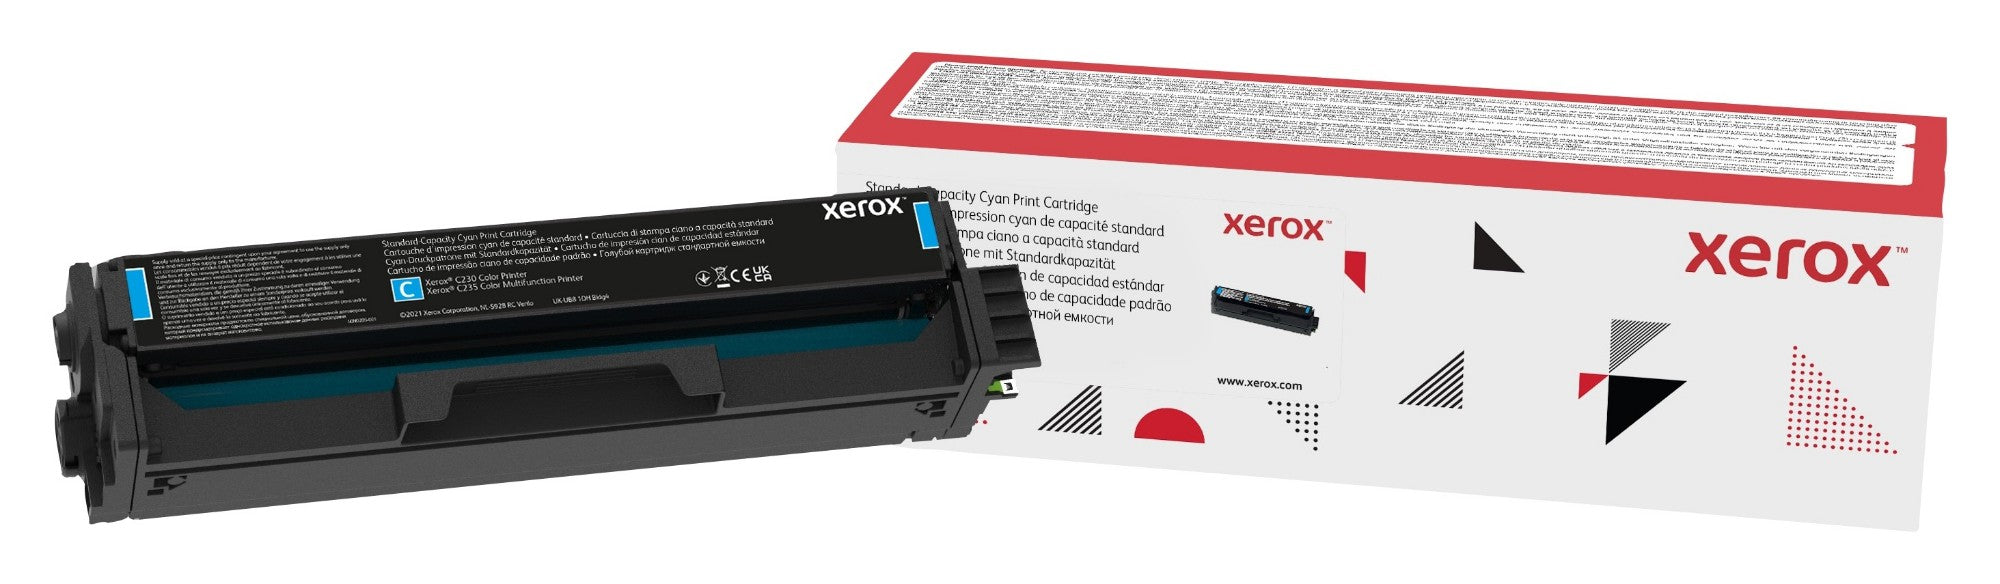 Xerox 006R04384 Toner cartridge cyan, 1.5K pages ISO/IEC 19752 for Xerox C 230